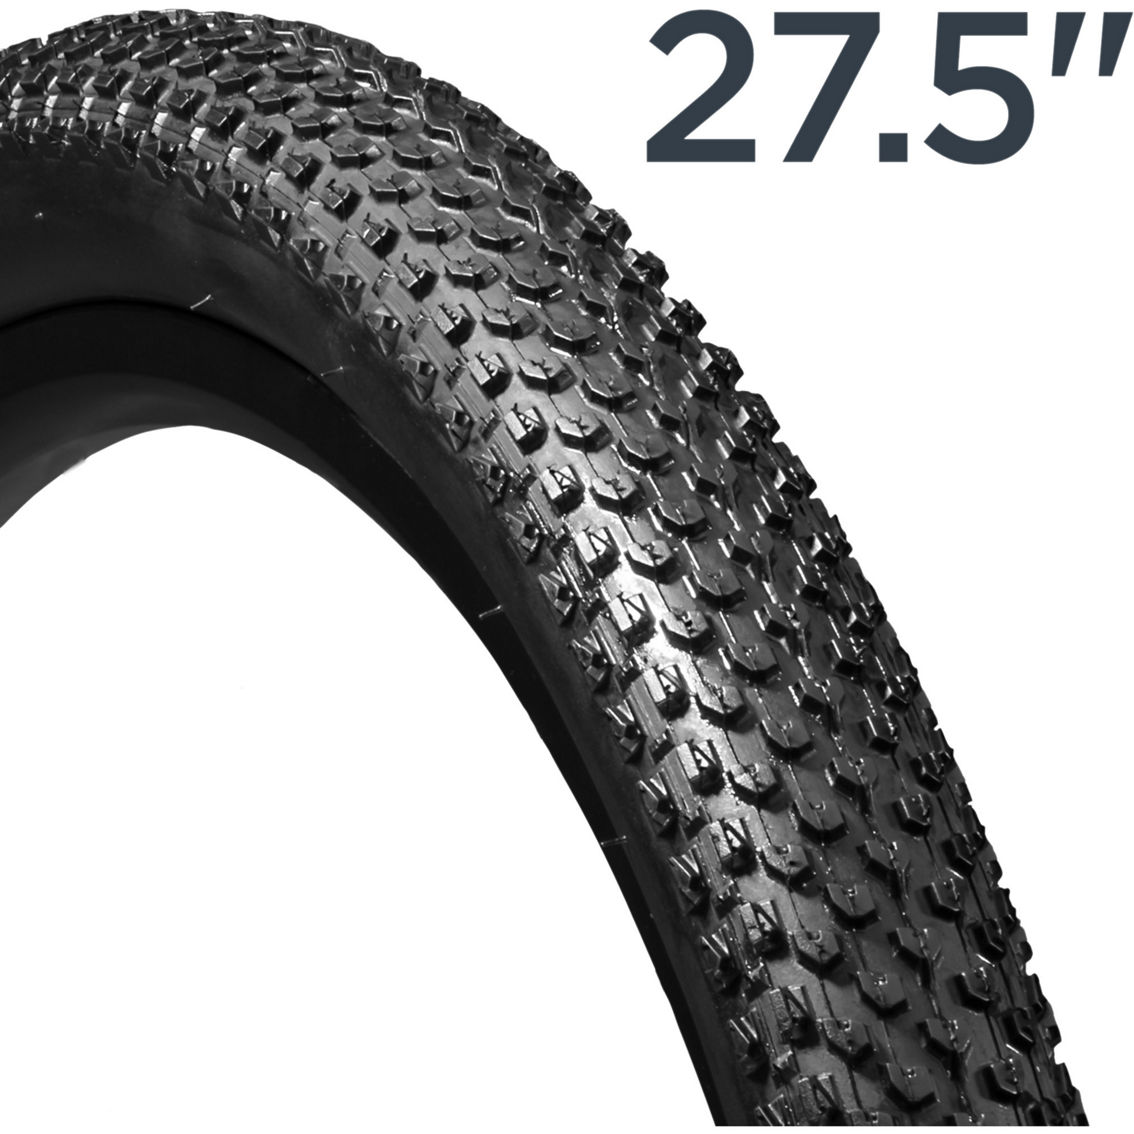 Schwinn 27.5 in. Puncture Guard Mountain Bike Tire - Image 5 of 8